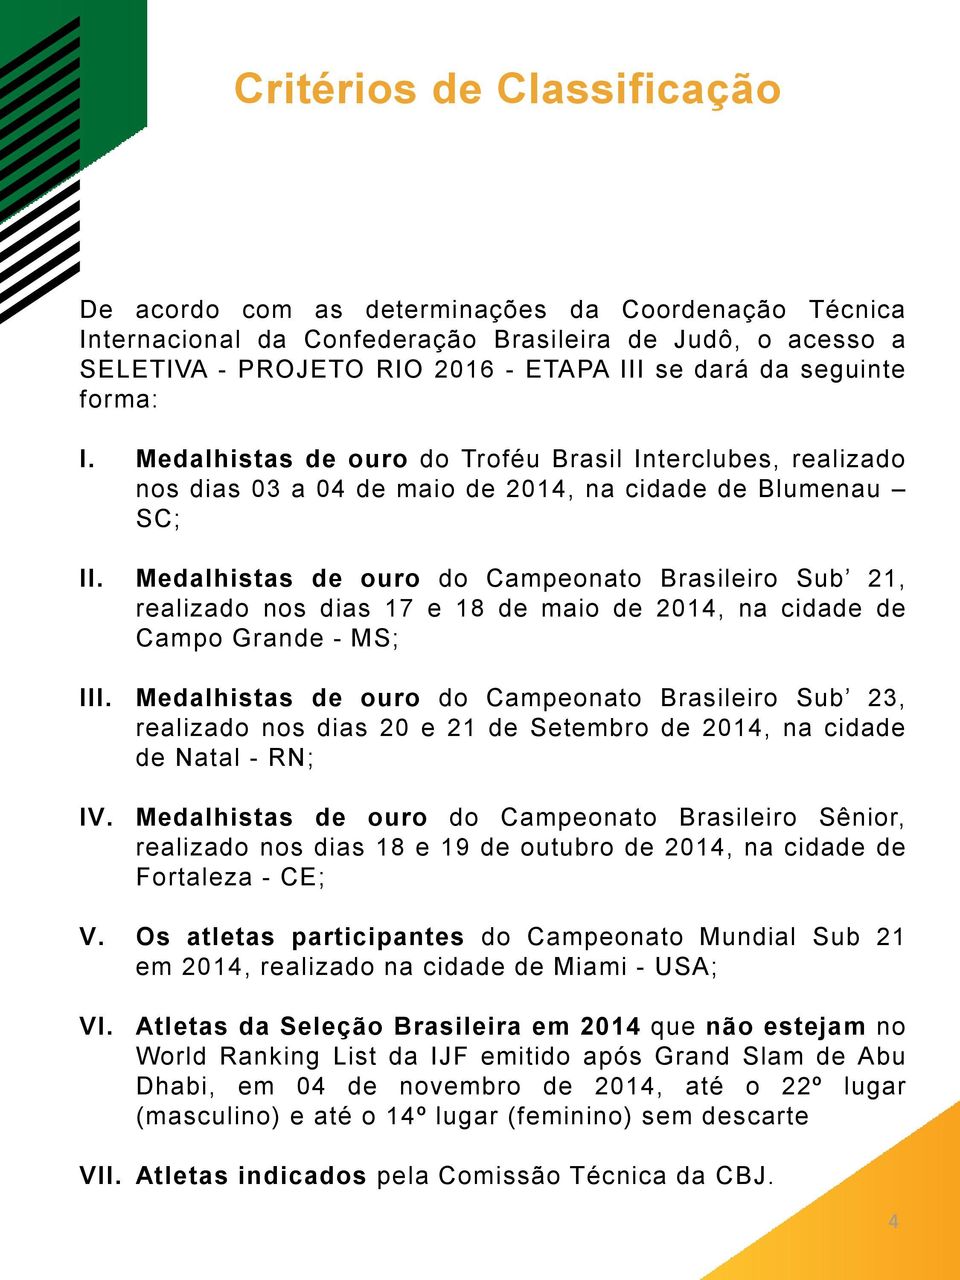 Medalhistas de ouro do Campeonato Brasileiro Sub 21, realizado nos dias 17 e 18 de maio de 2014, na cidade de Campo Grande - MS; III.